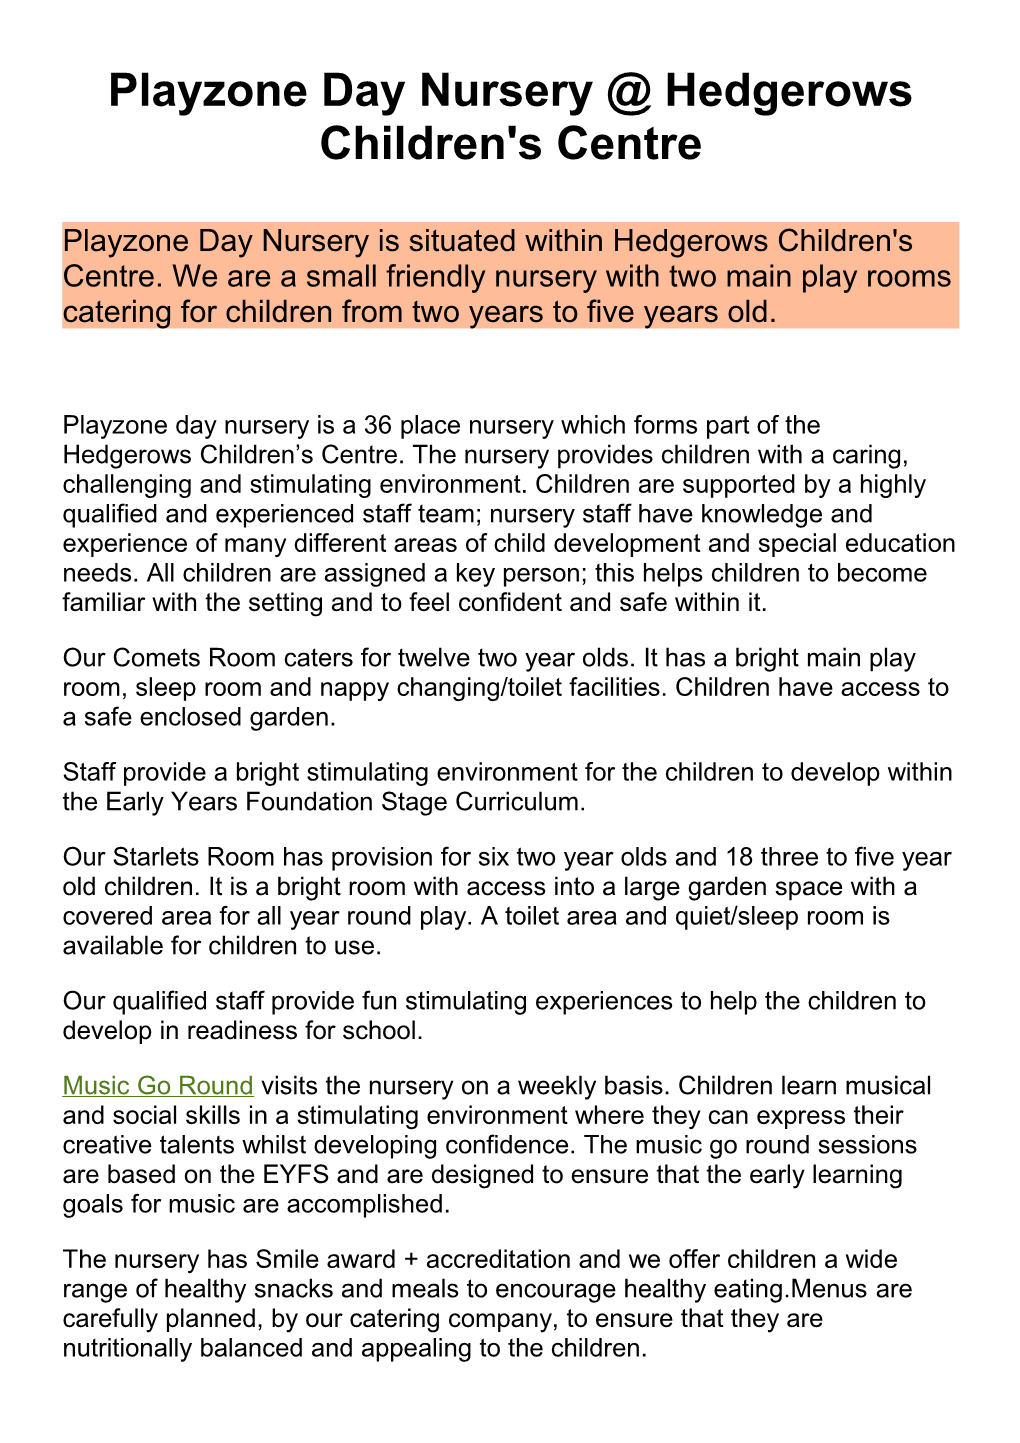 Playzone Day Nursery Hedgerows Children's Centre